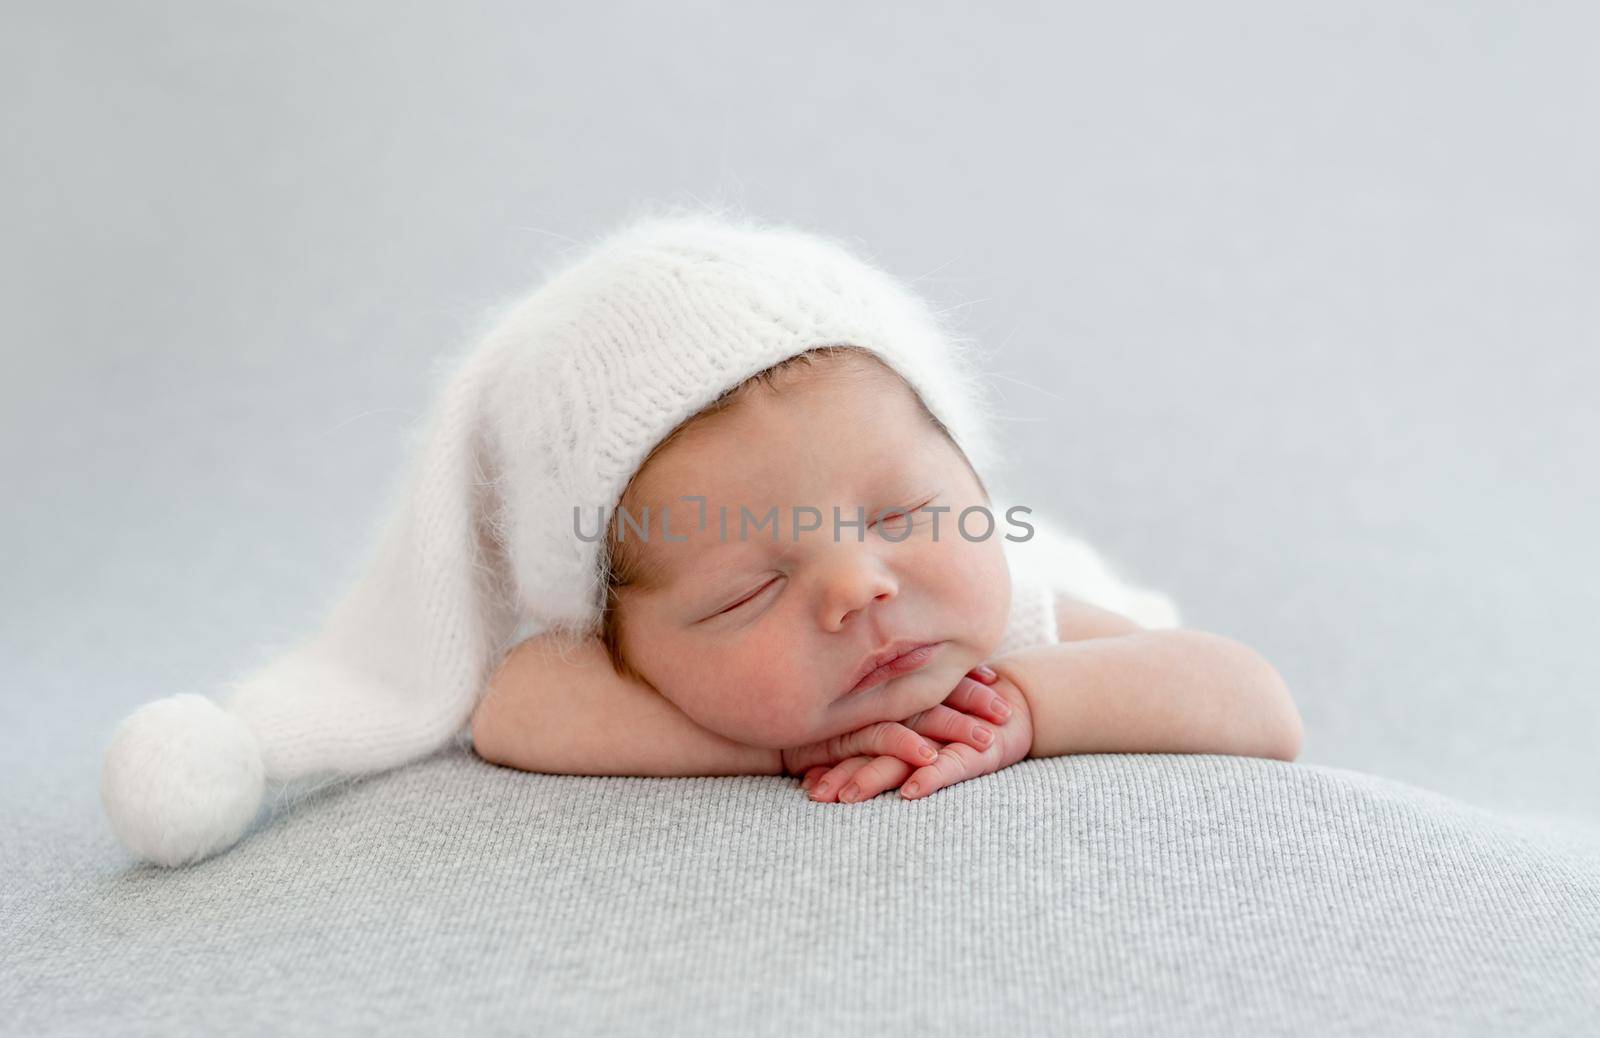 Newborn baby boy sleeping wearing knitted white hat and holding his hands under cheeks. Infant kid studio portrait